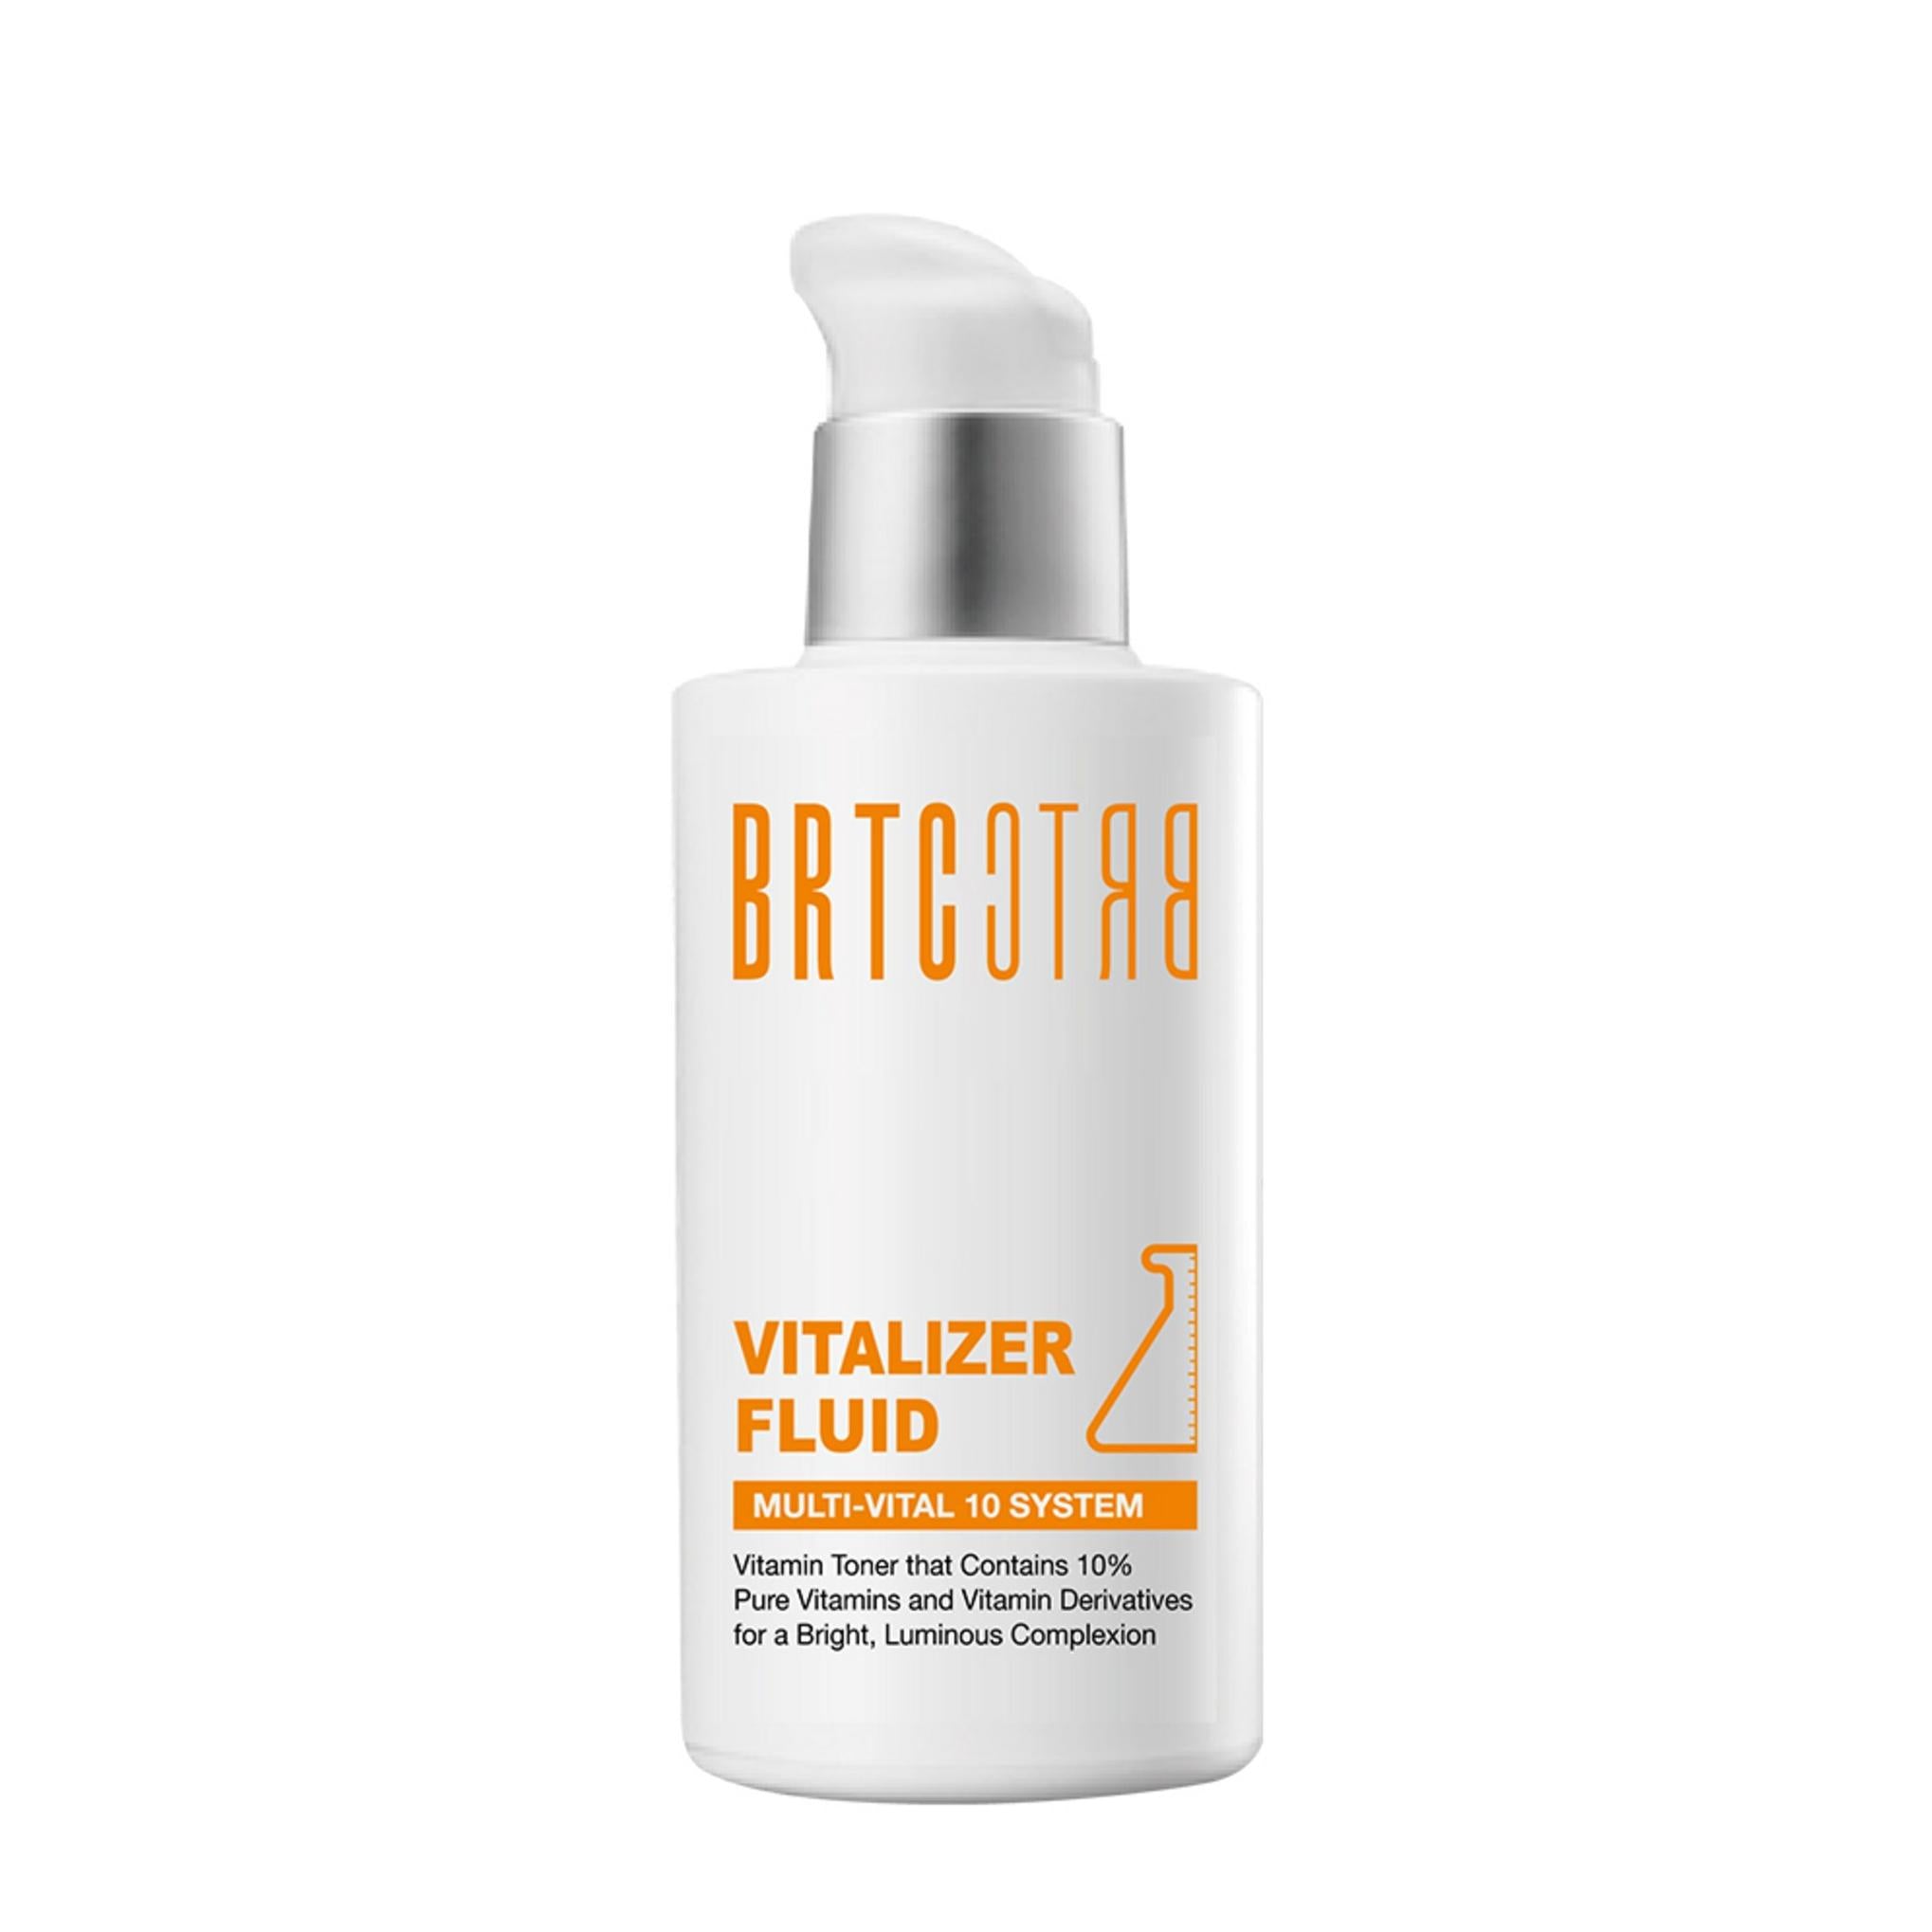 BRTC BRTC Vitalizer Fluid 120ml Vitamin Lotion Emulsion